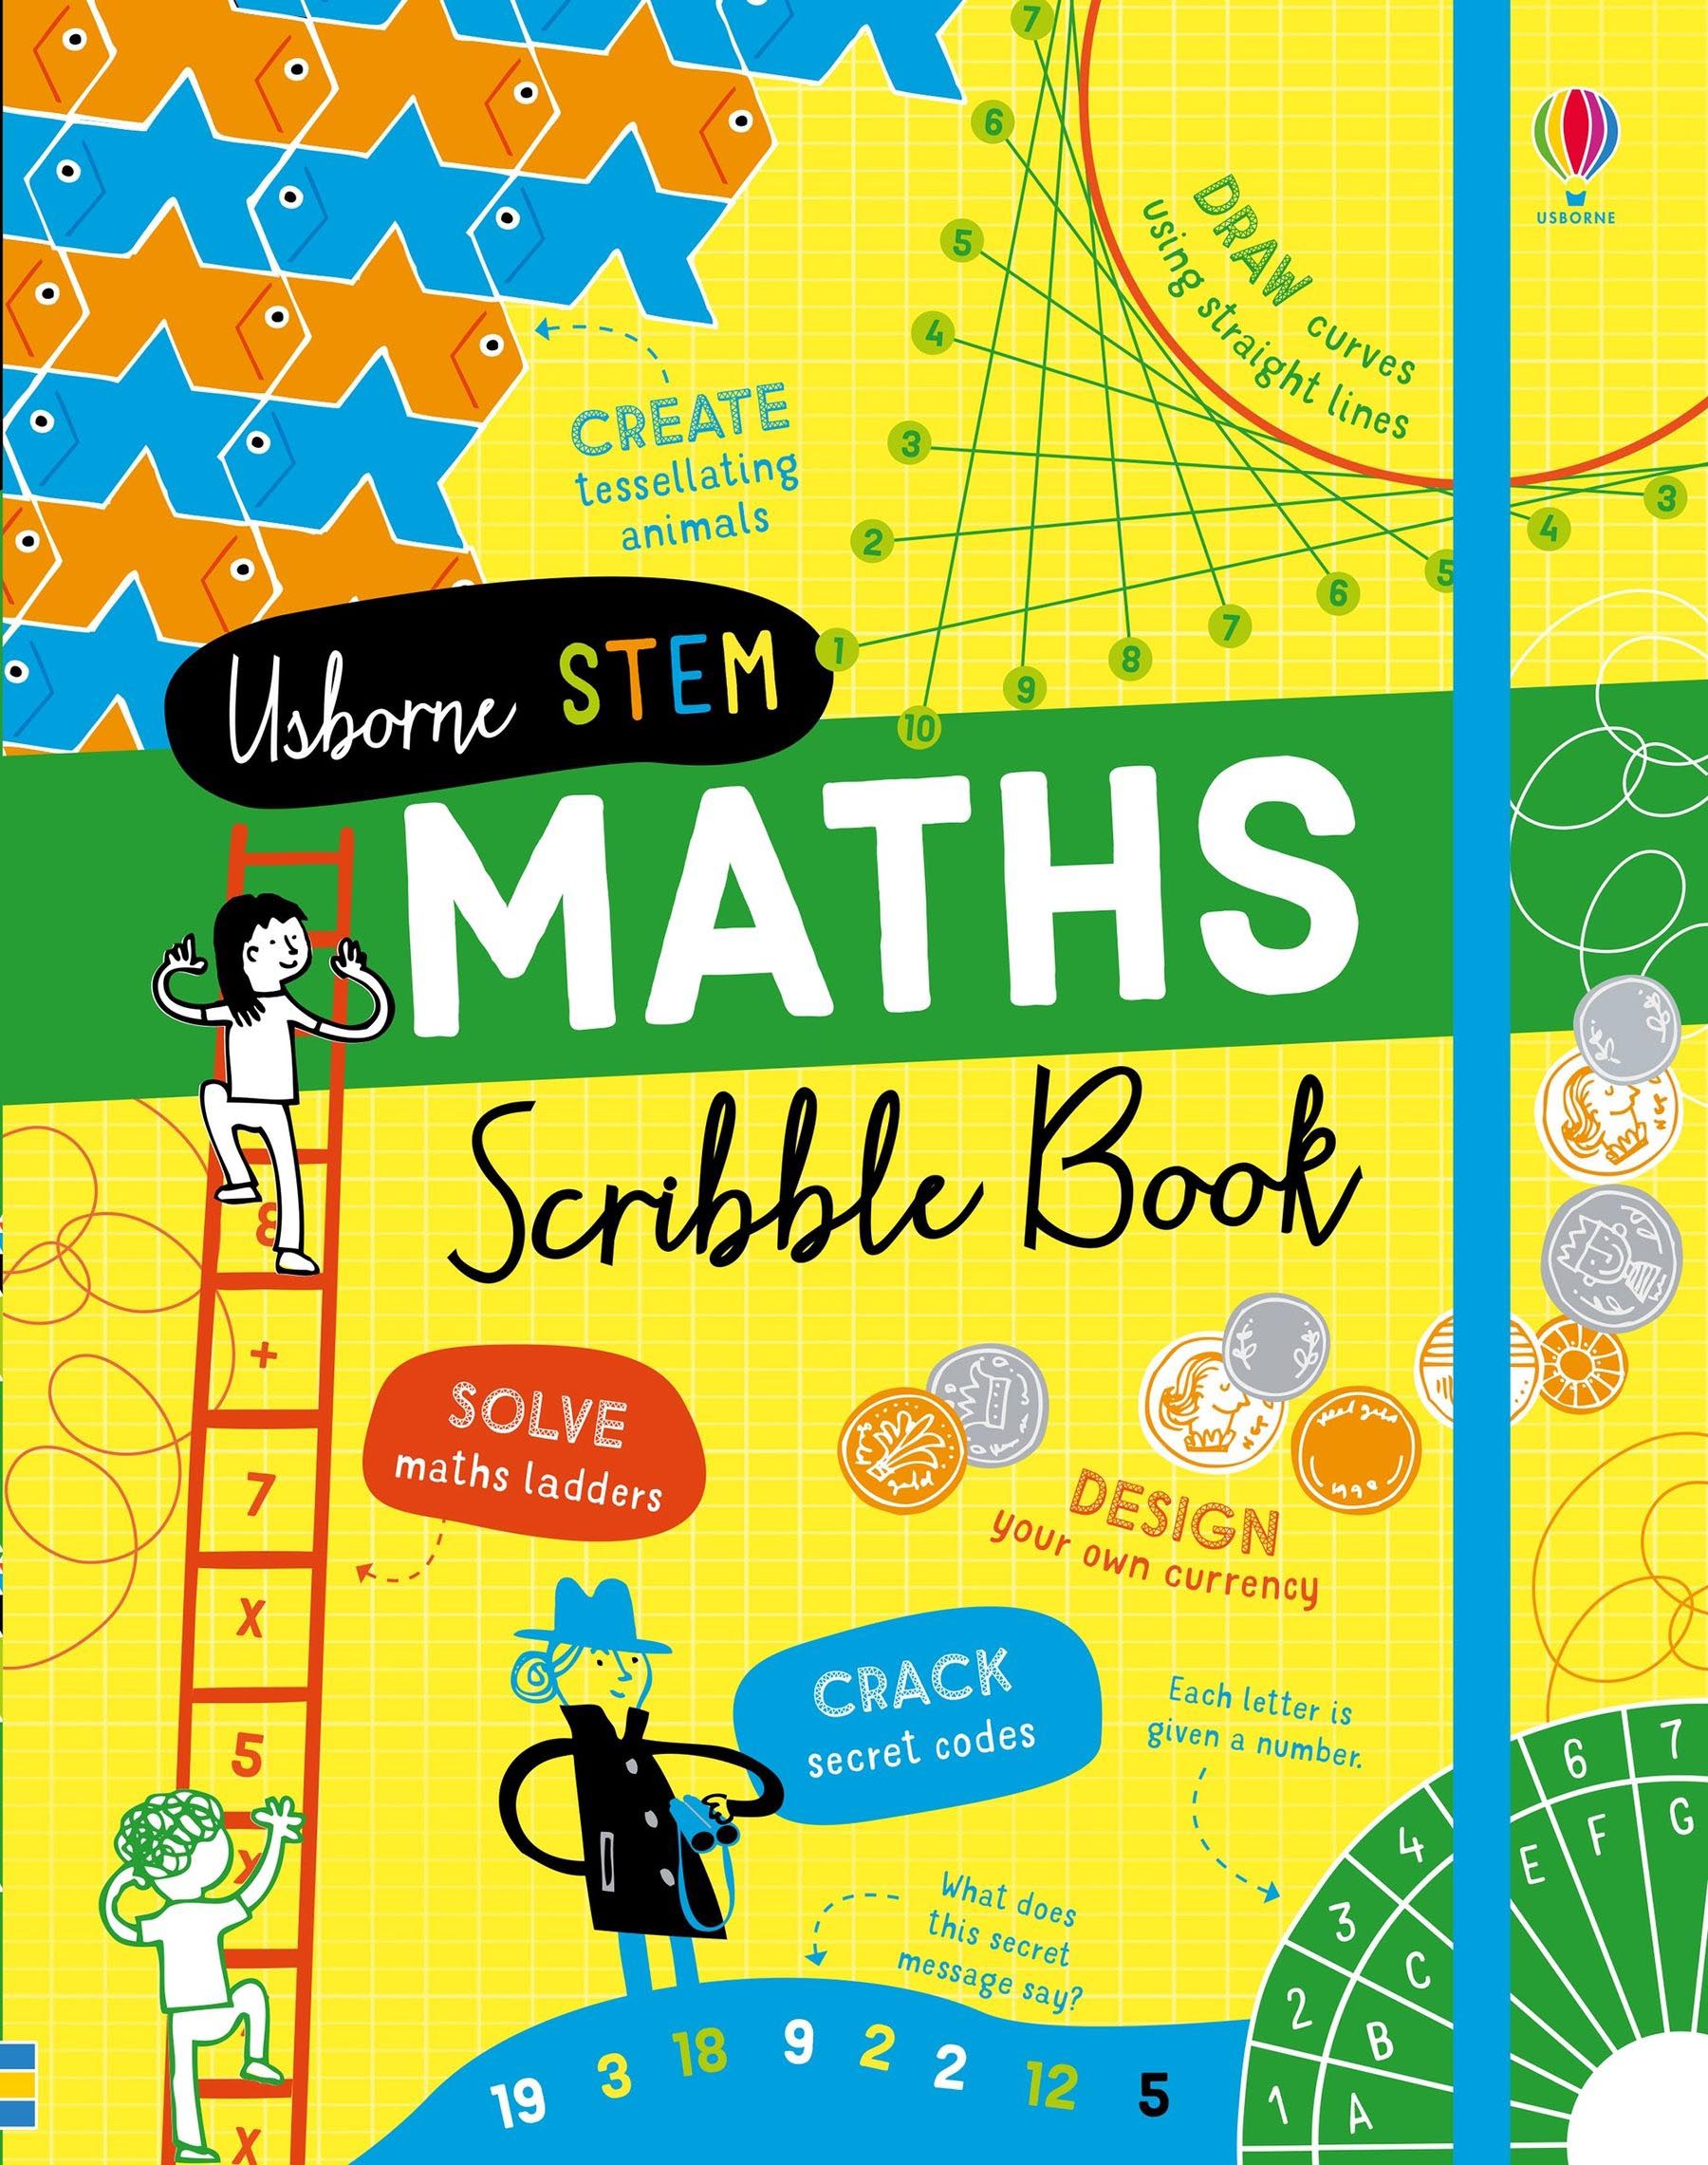 Usborne STEM Maths Scribble Book